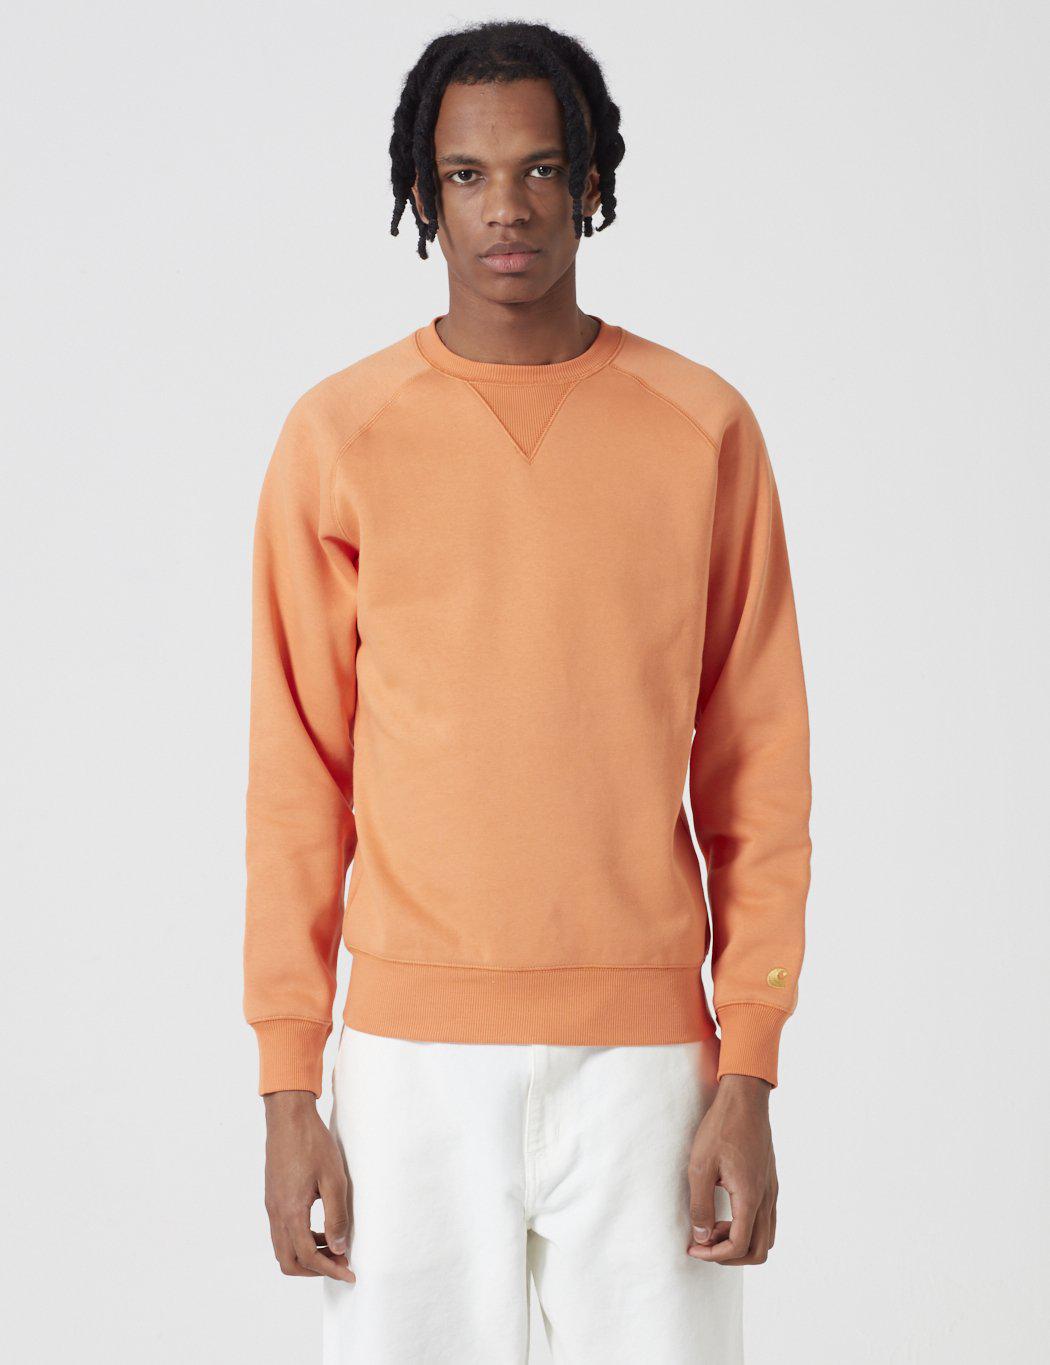 Lyst - Carhartt Chase Sweatshirt in Orange for Men